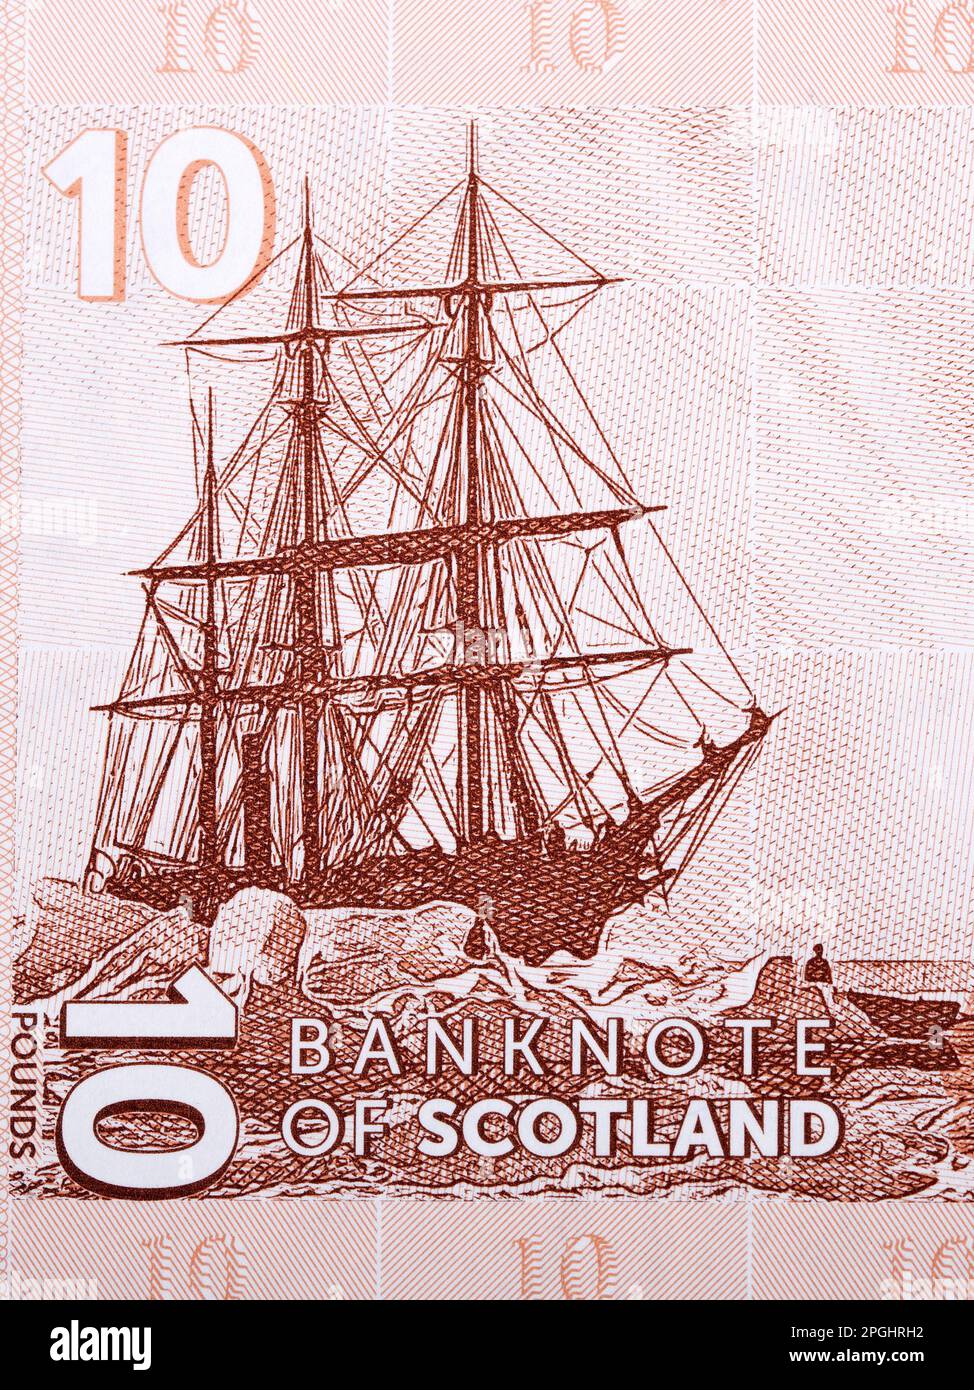 Ship - sailing from Scottish money - pounds Stock Photo